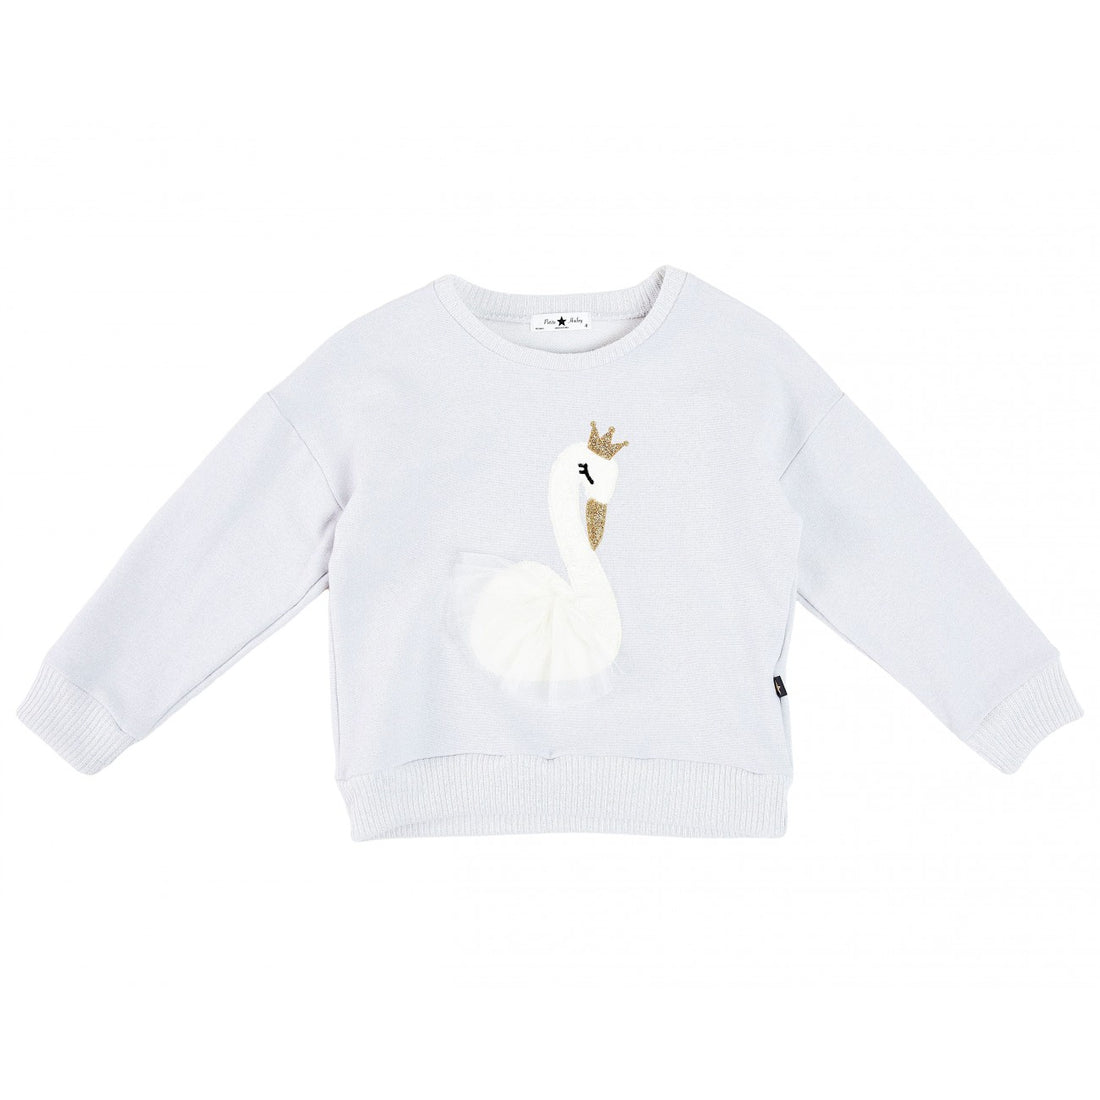 Swan Glitter Sweater